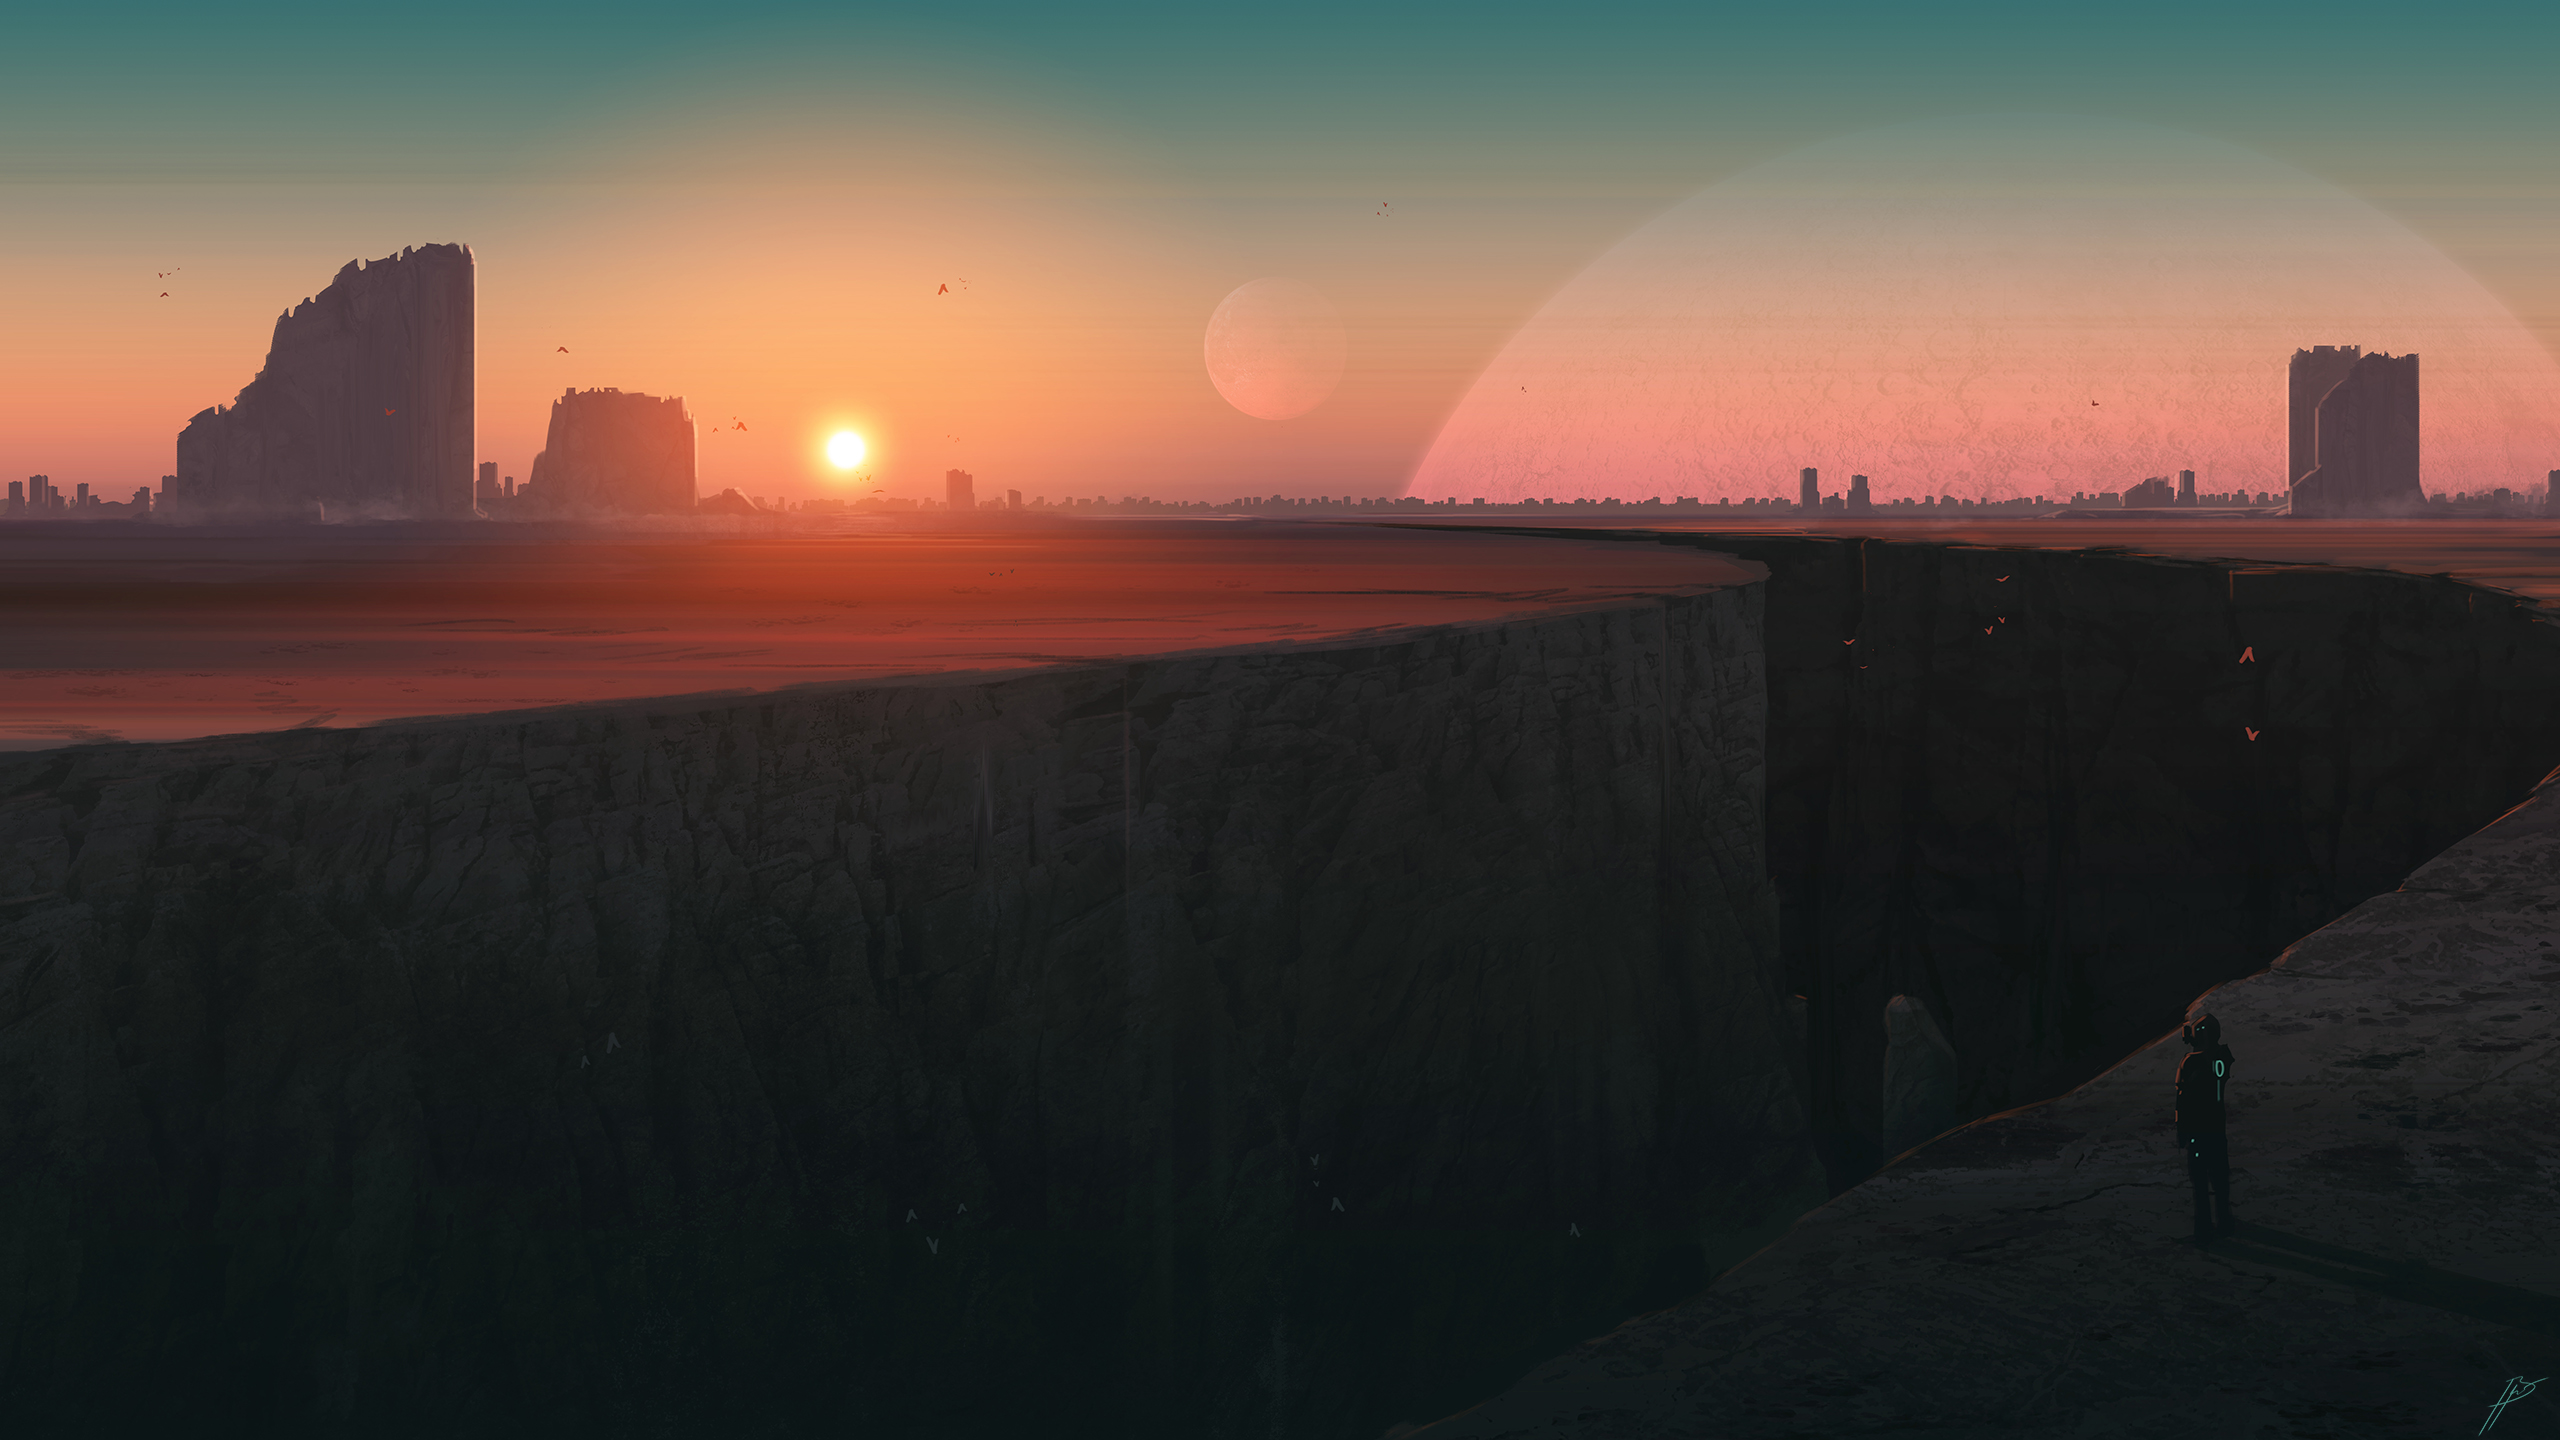 General 2560x1440 JoeyJazz landscape canyon digital art sky Sun futuristic science fiction